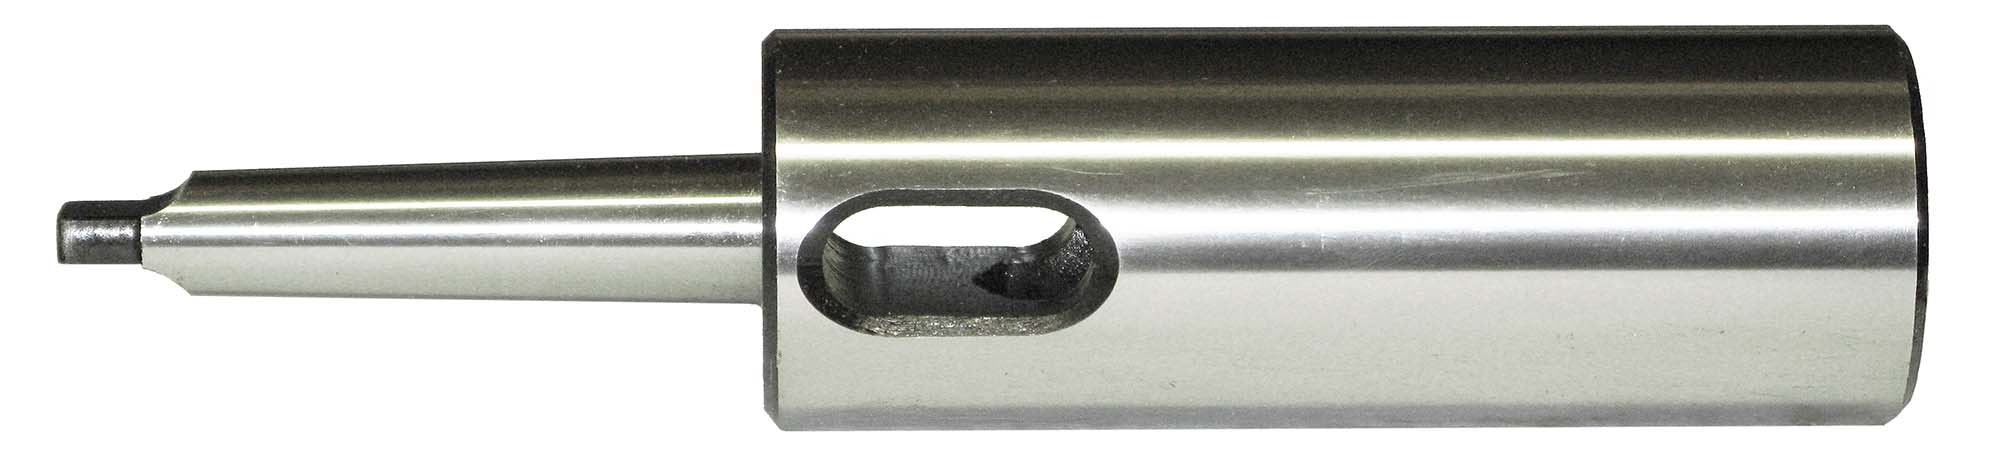 5 Morse Taper(hole)-4 Morse Taper(shank) Extension Socket, SL5-4